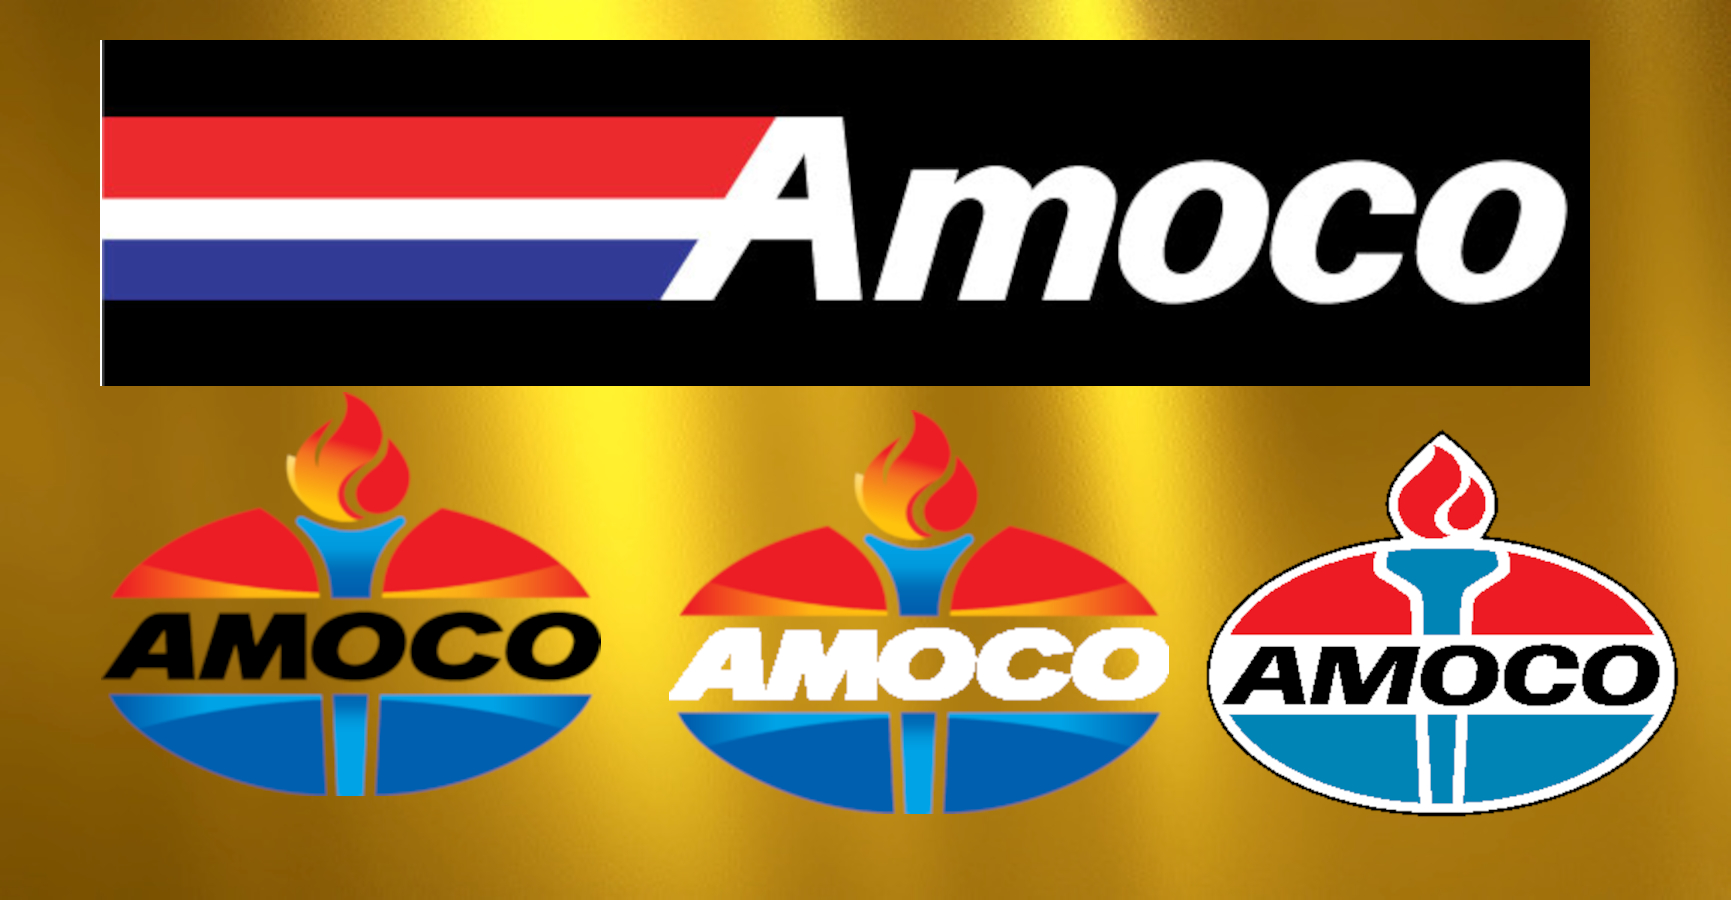 Amoco Logos.jpg